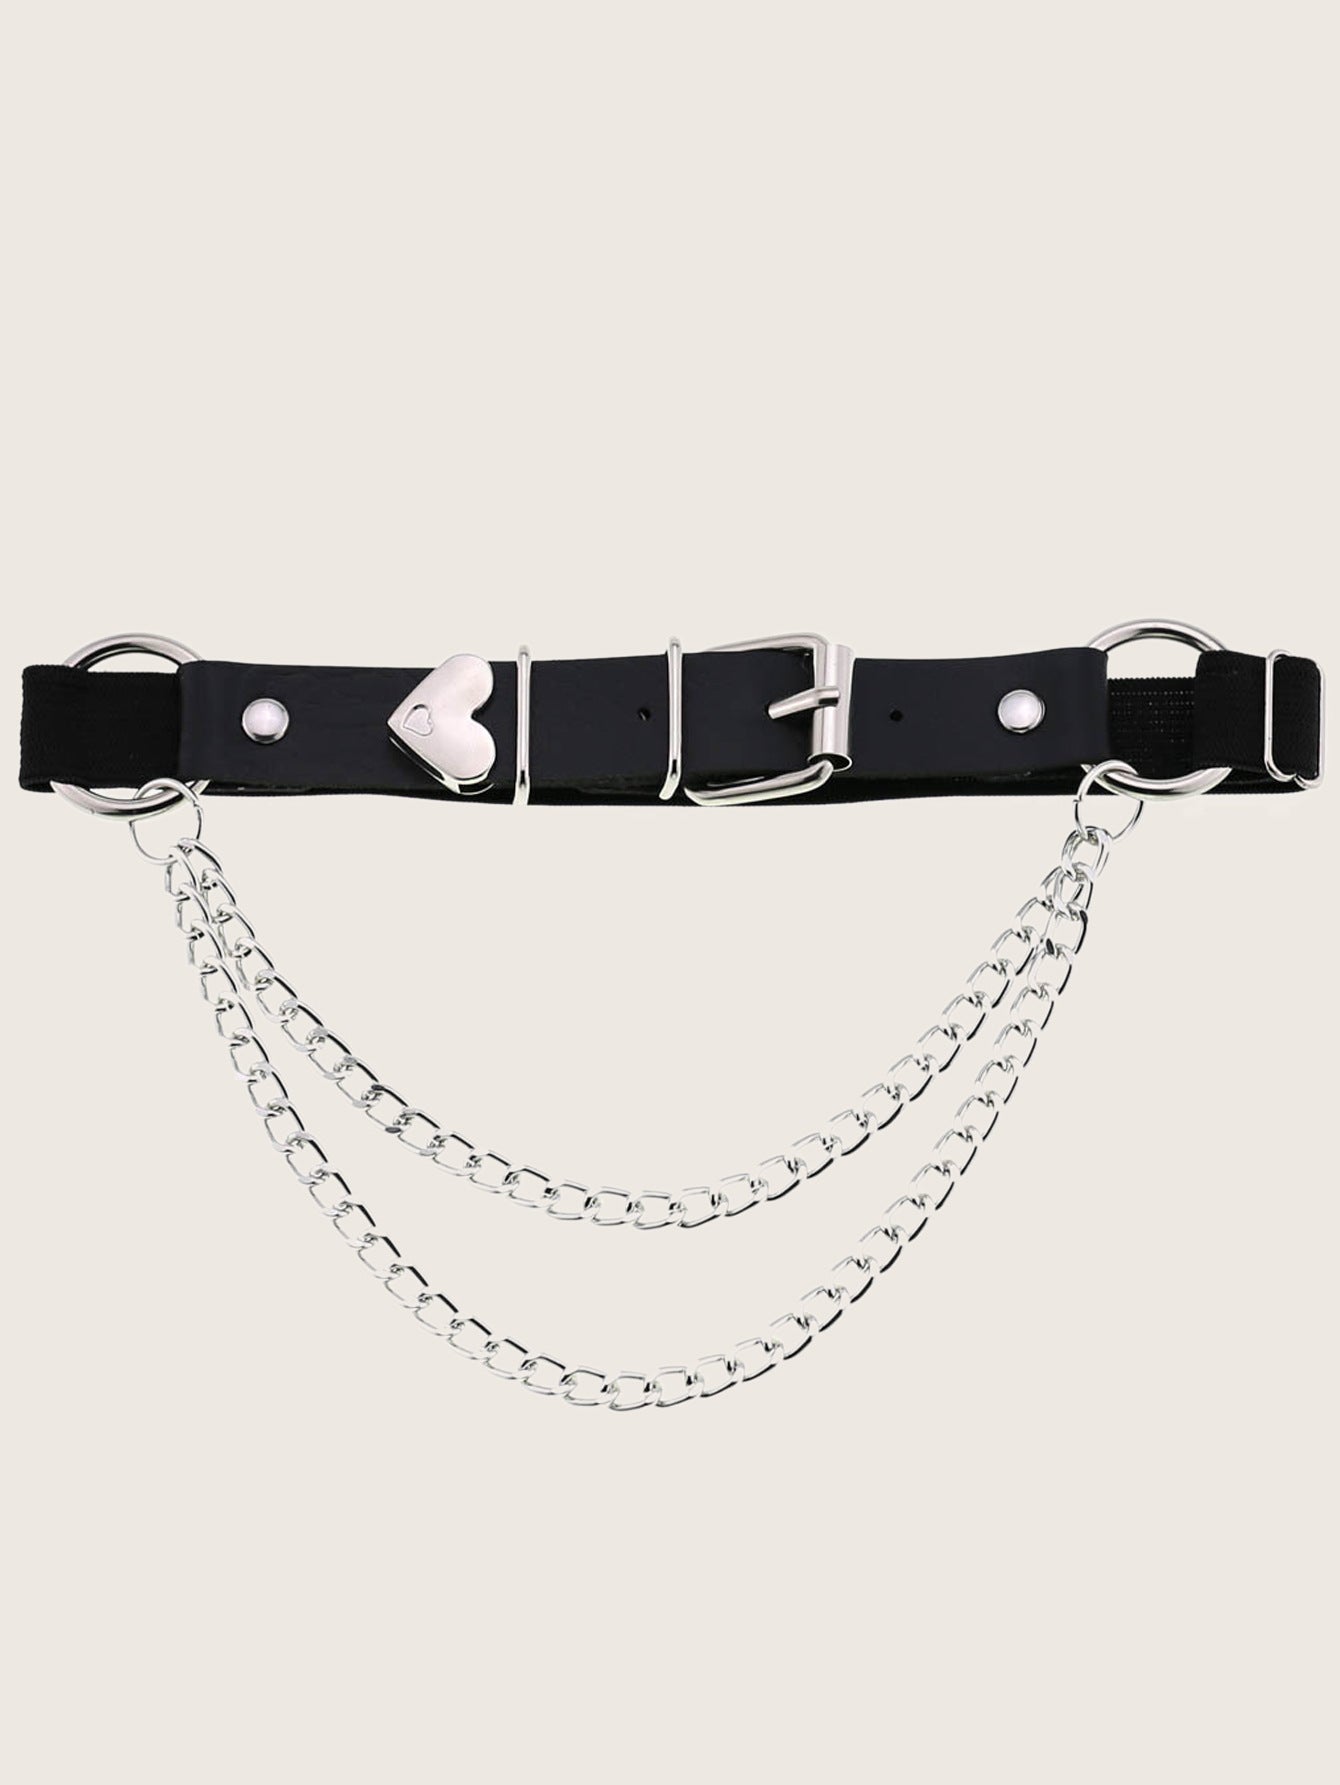 Heart Chain Leather Garter Belt